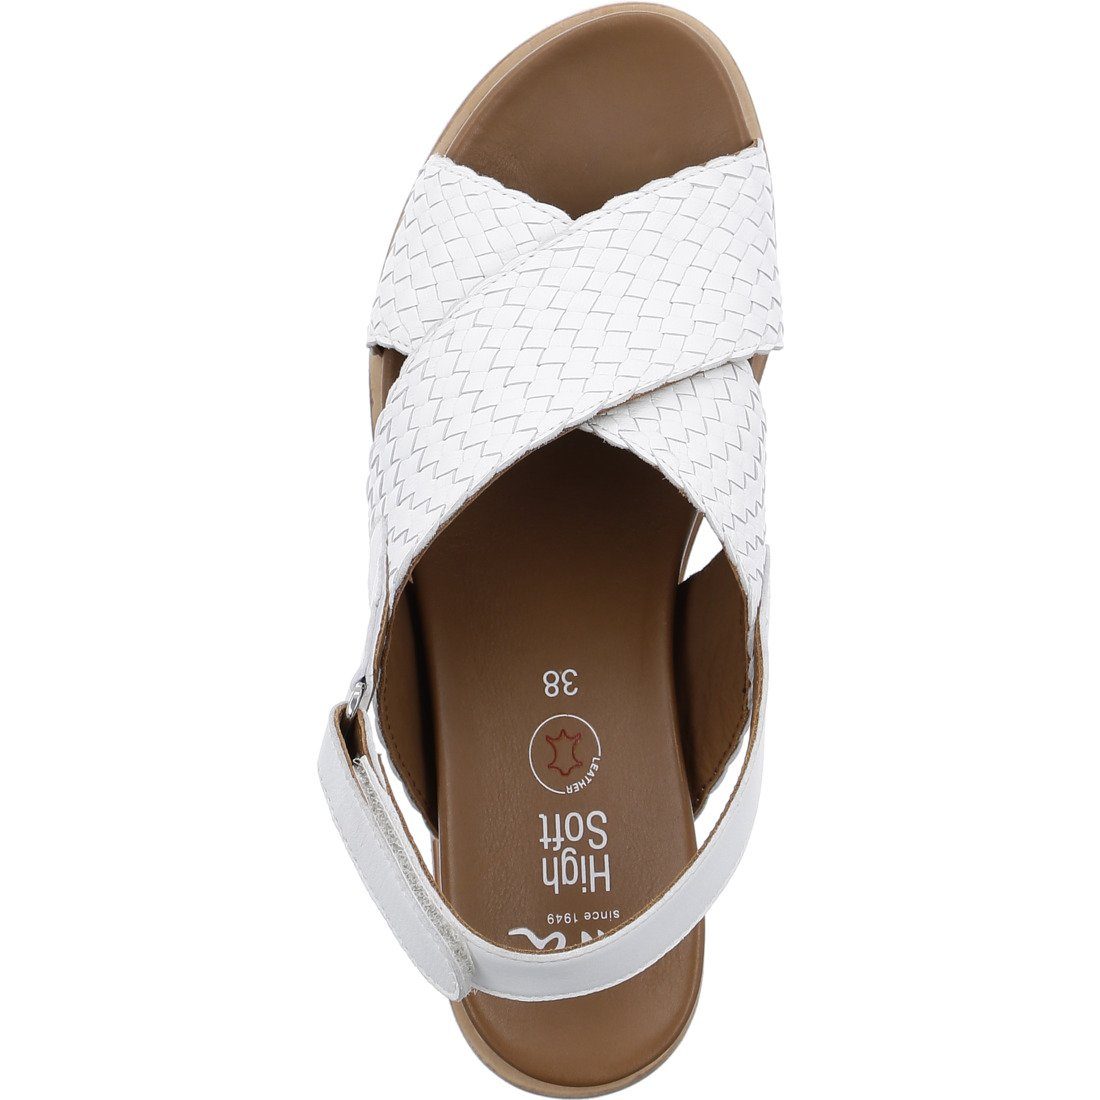 Schuhe, Valencia Damen - Leder Sandalette Ara 045298 Ara Sandalette weiß